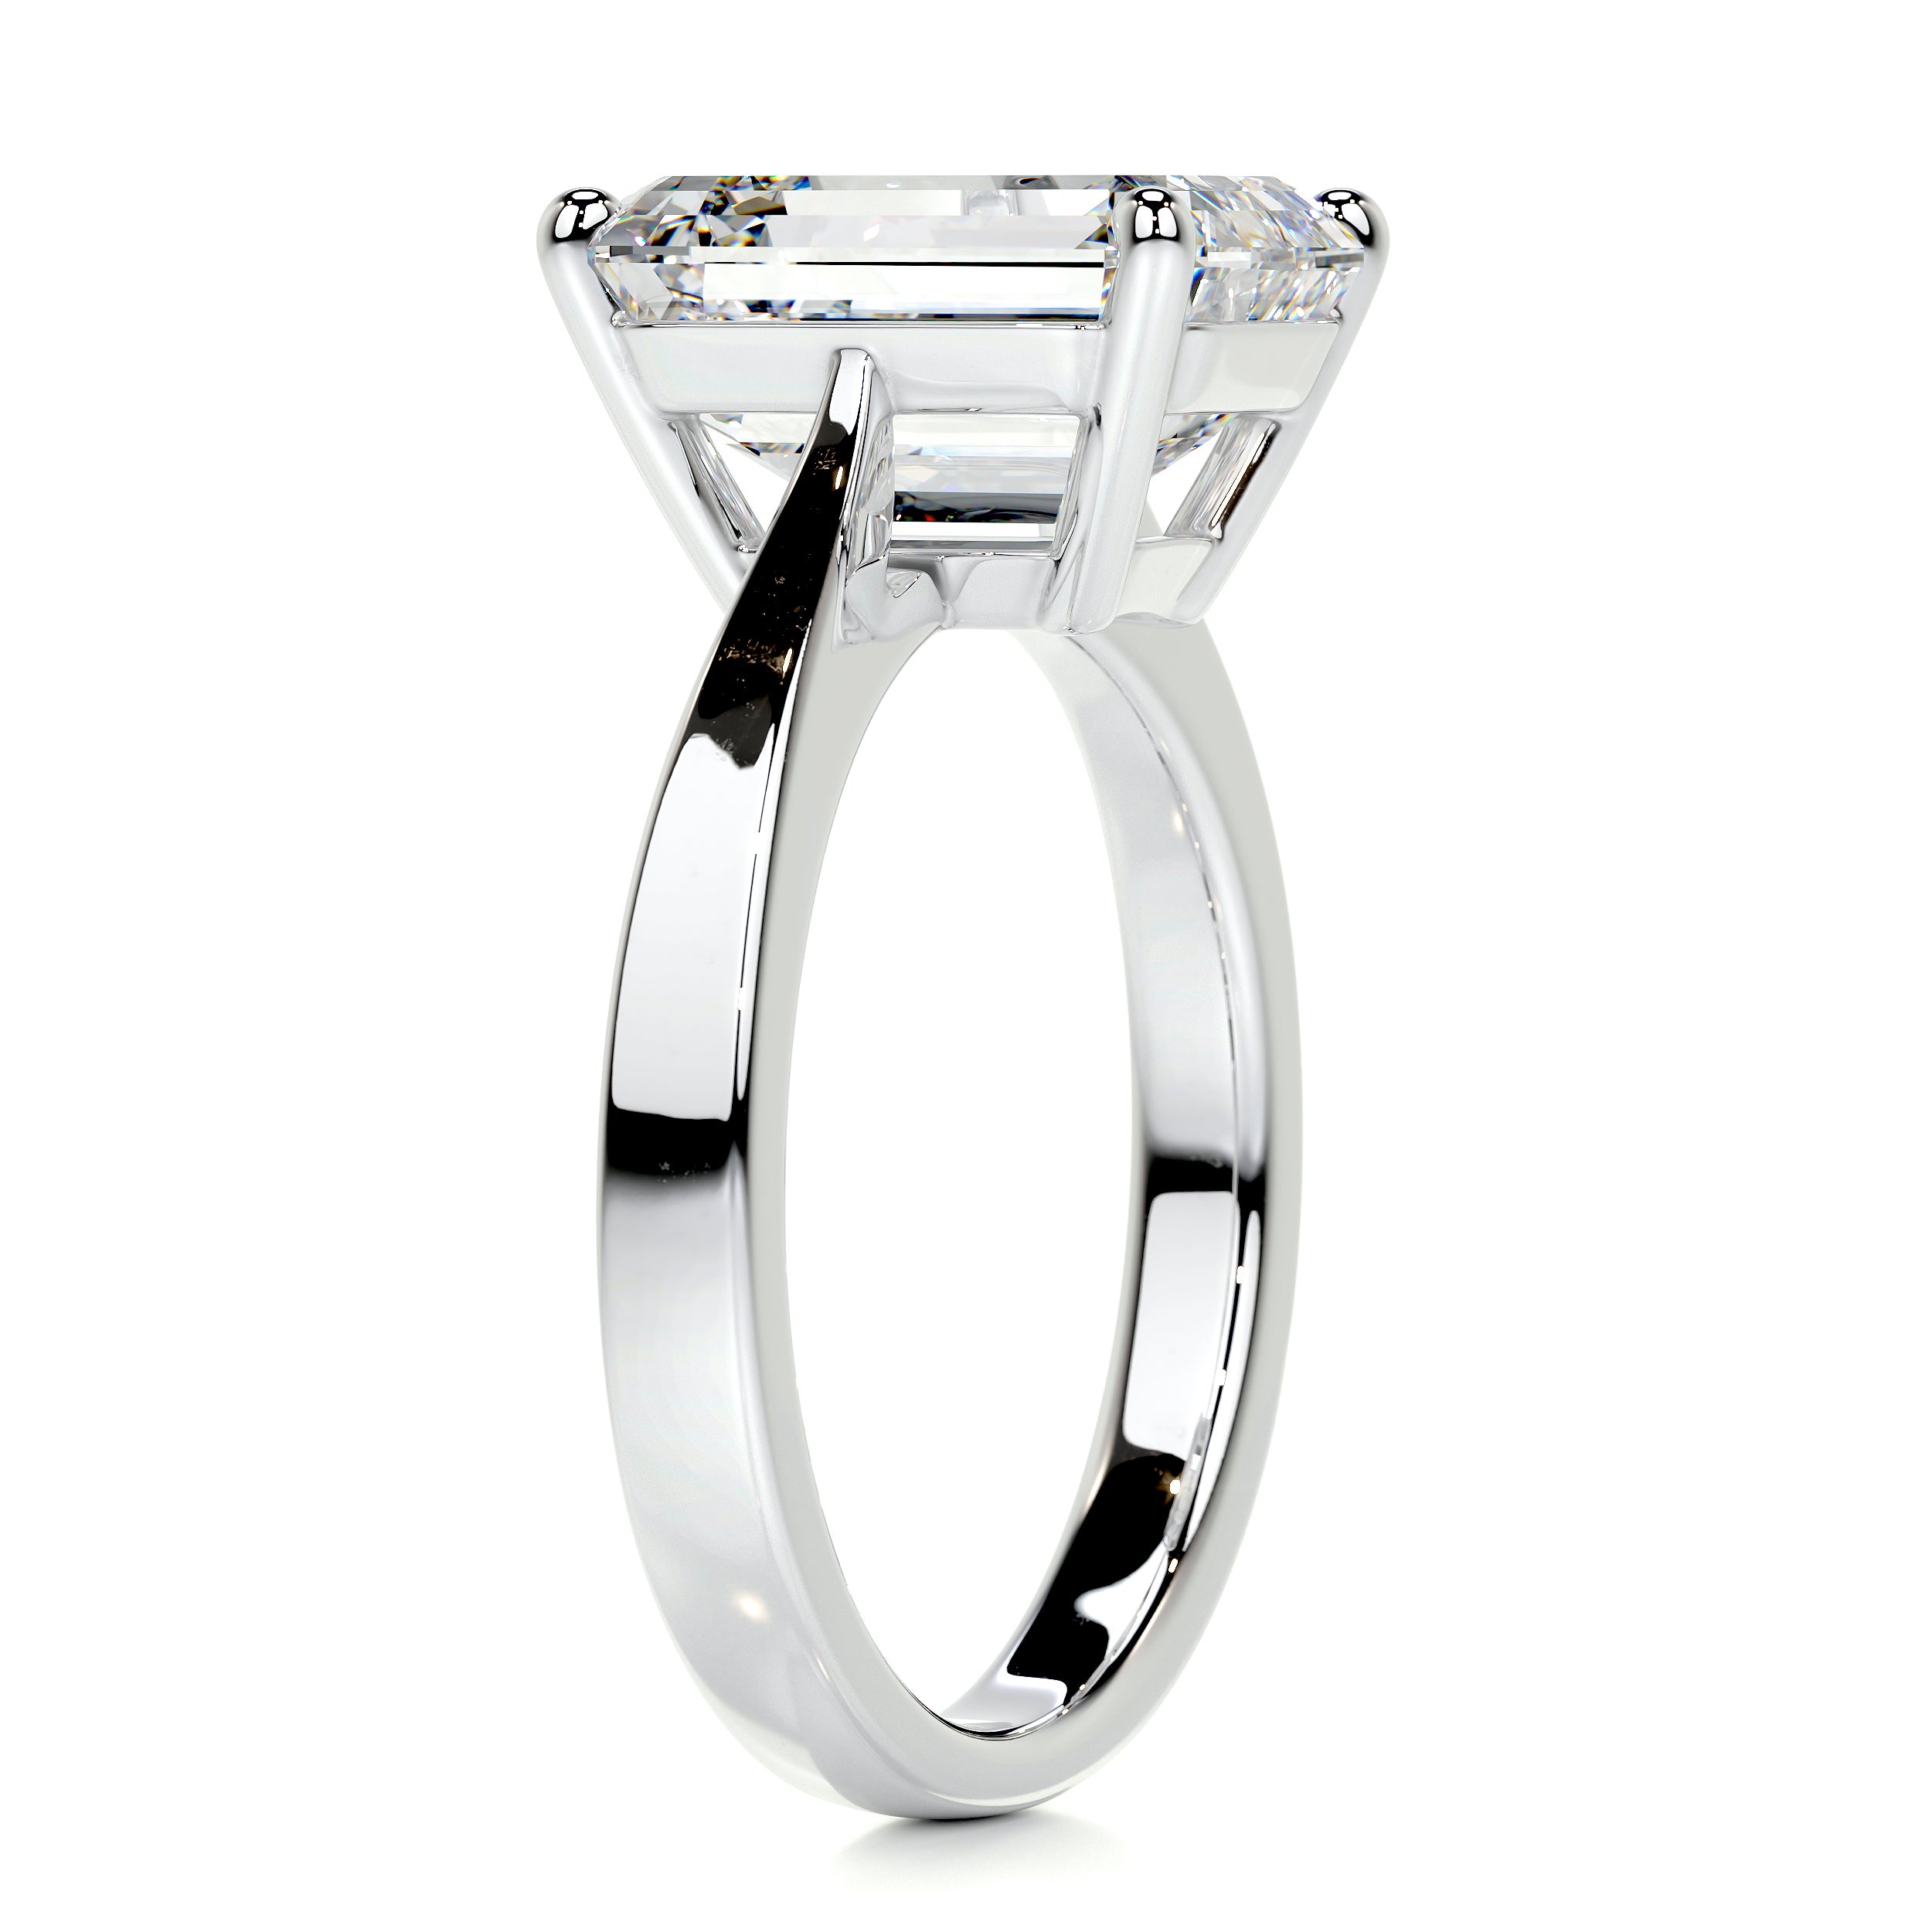 Mariana Diamond Engagement Ring   (4 Carat) -14K White Gold